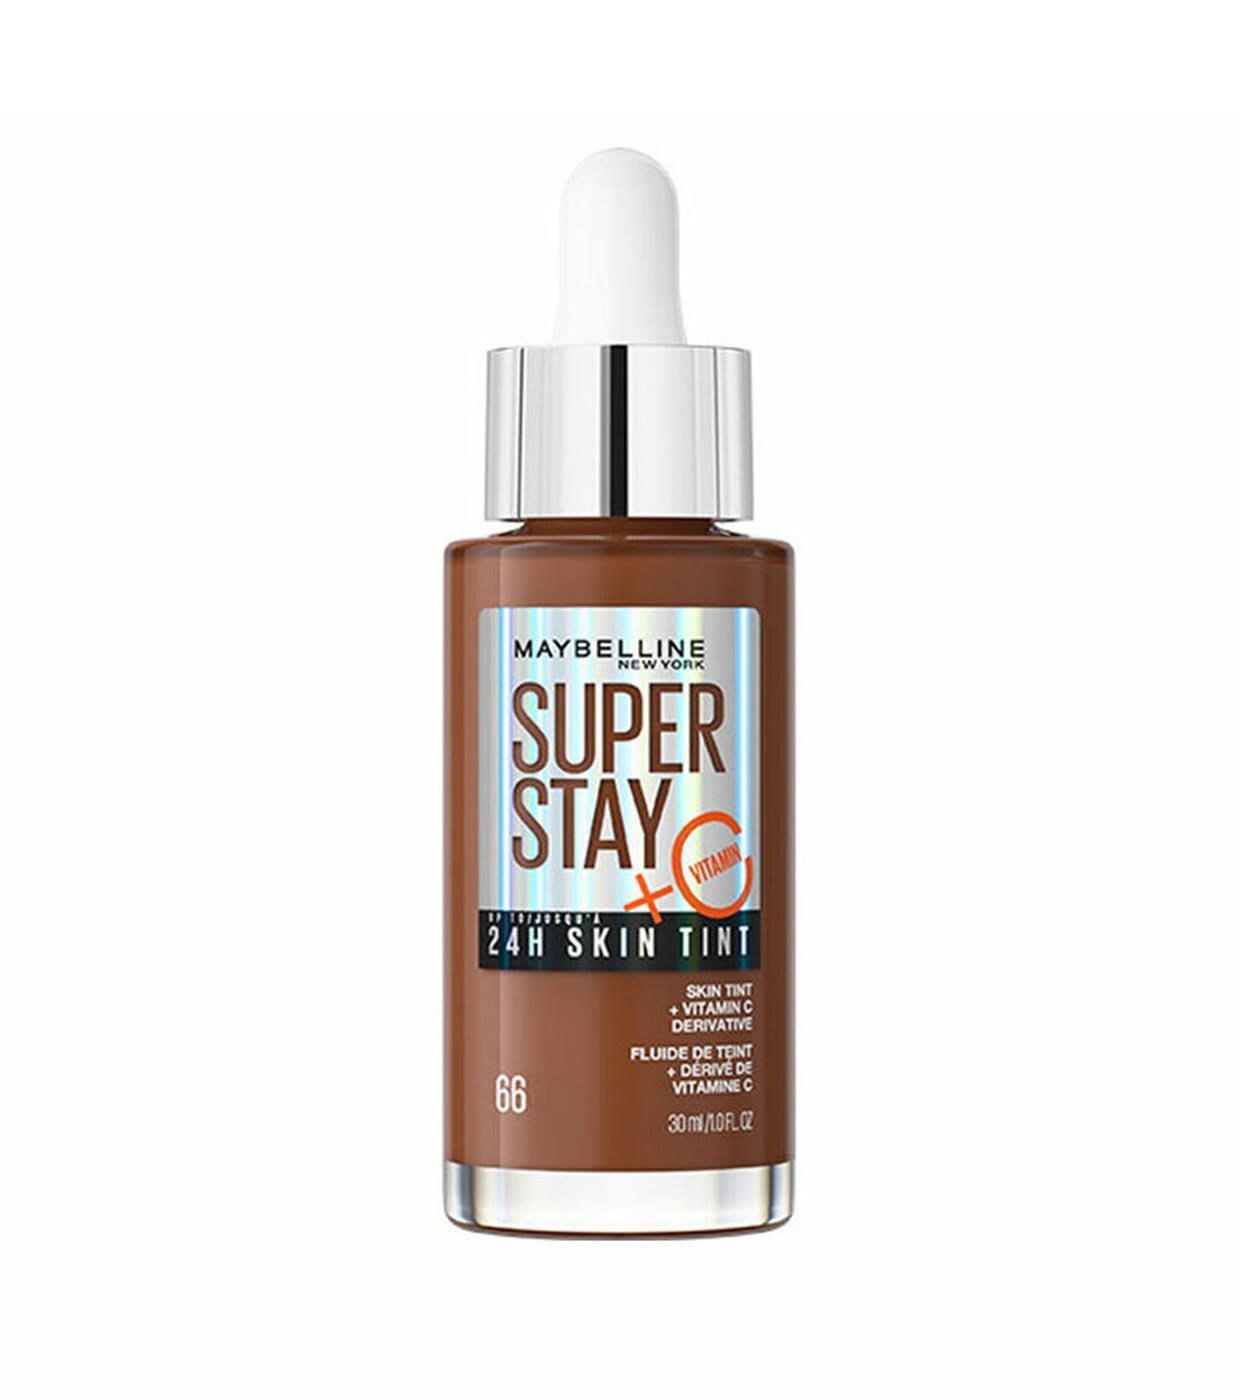 Maybelline - Serum Makeup Base SuperStay 24H Skin Tint + Vitamin C - 66